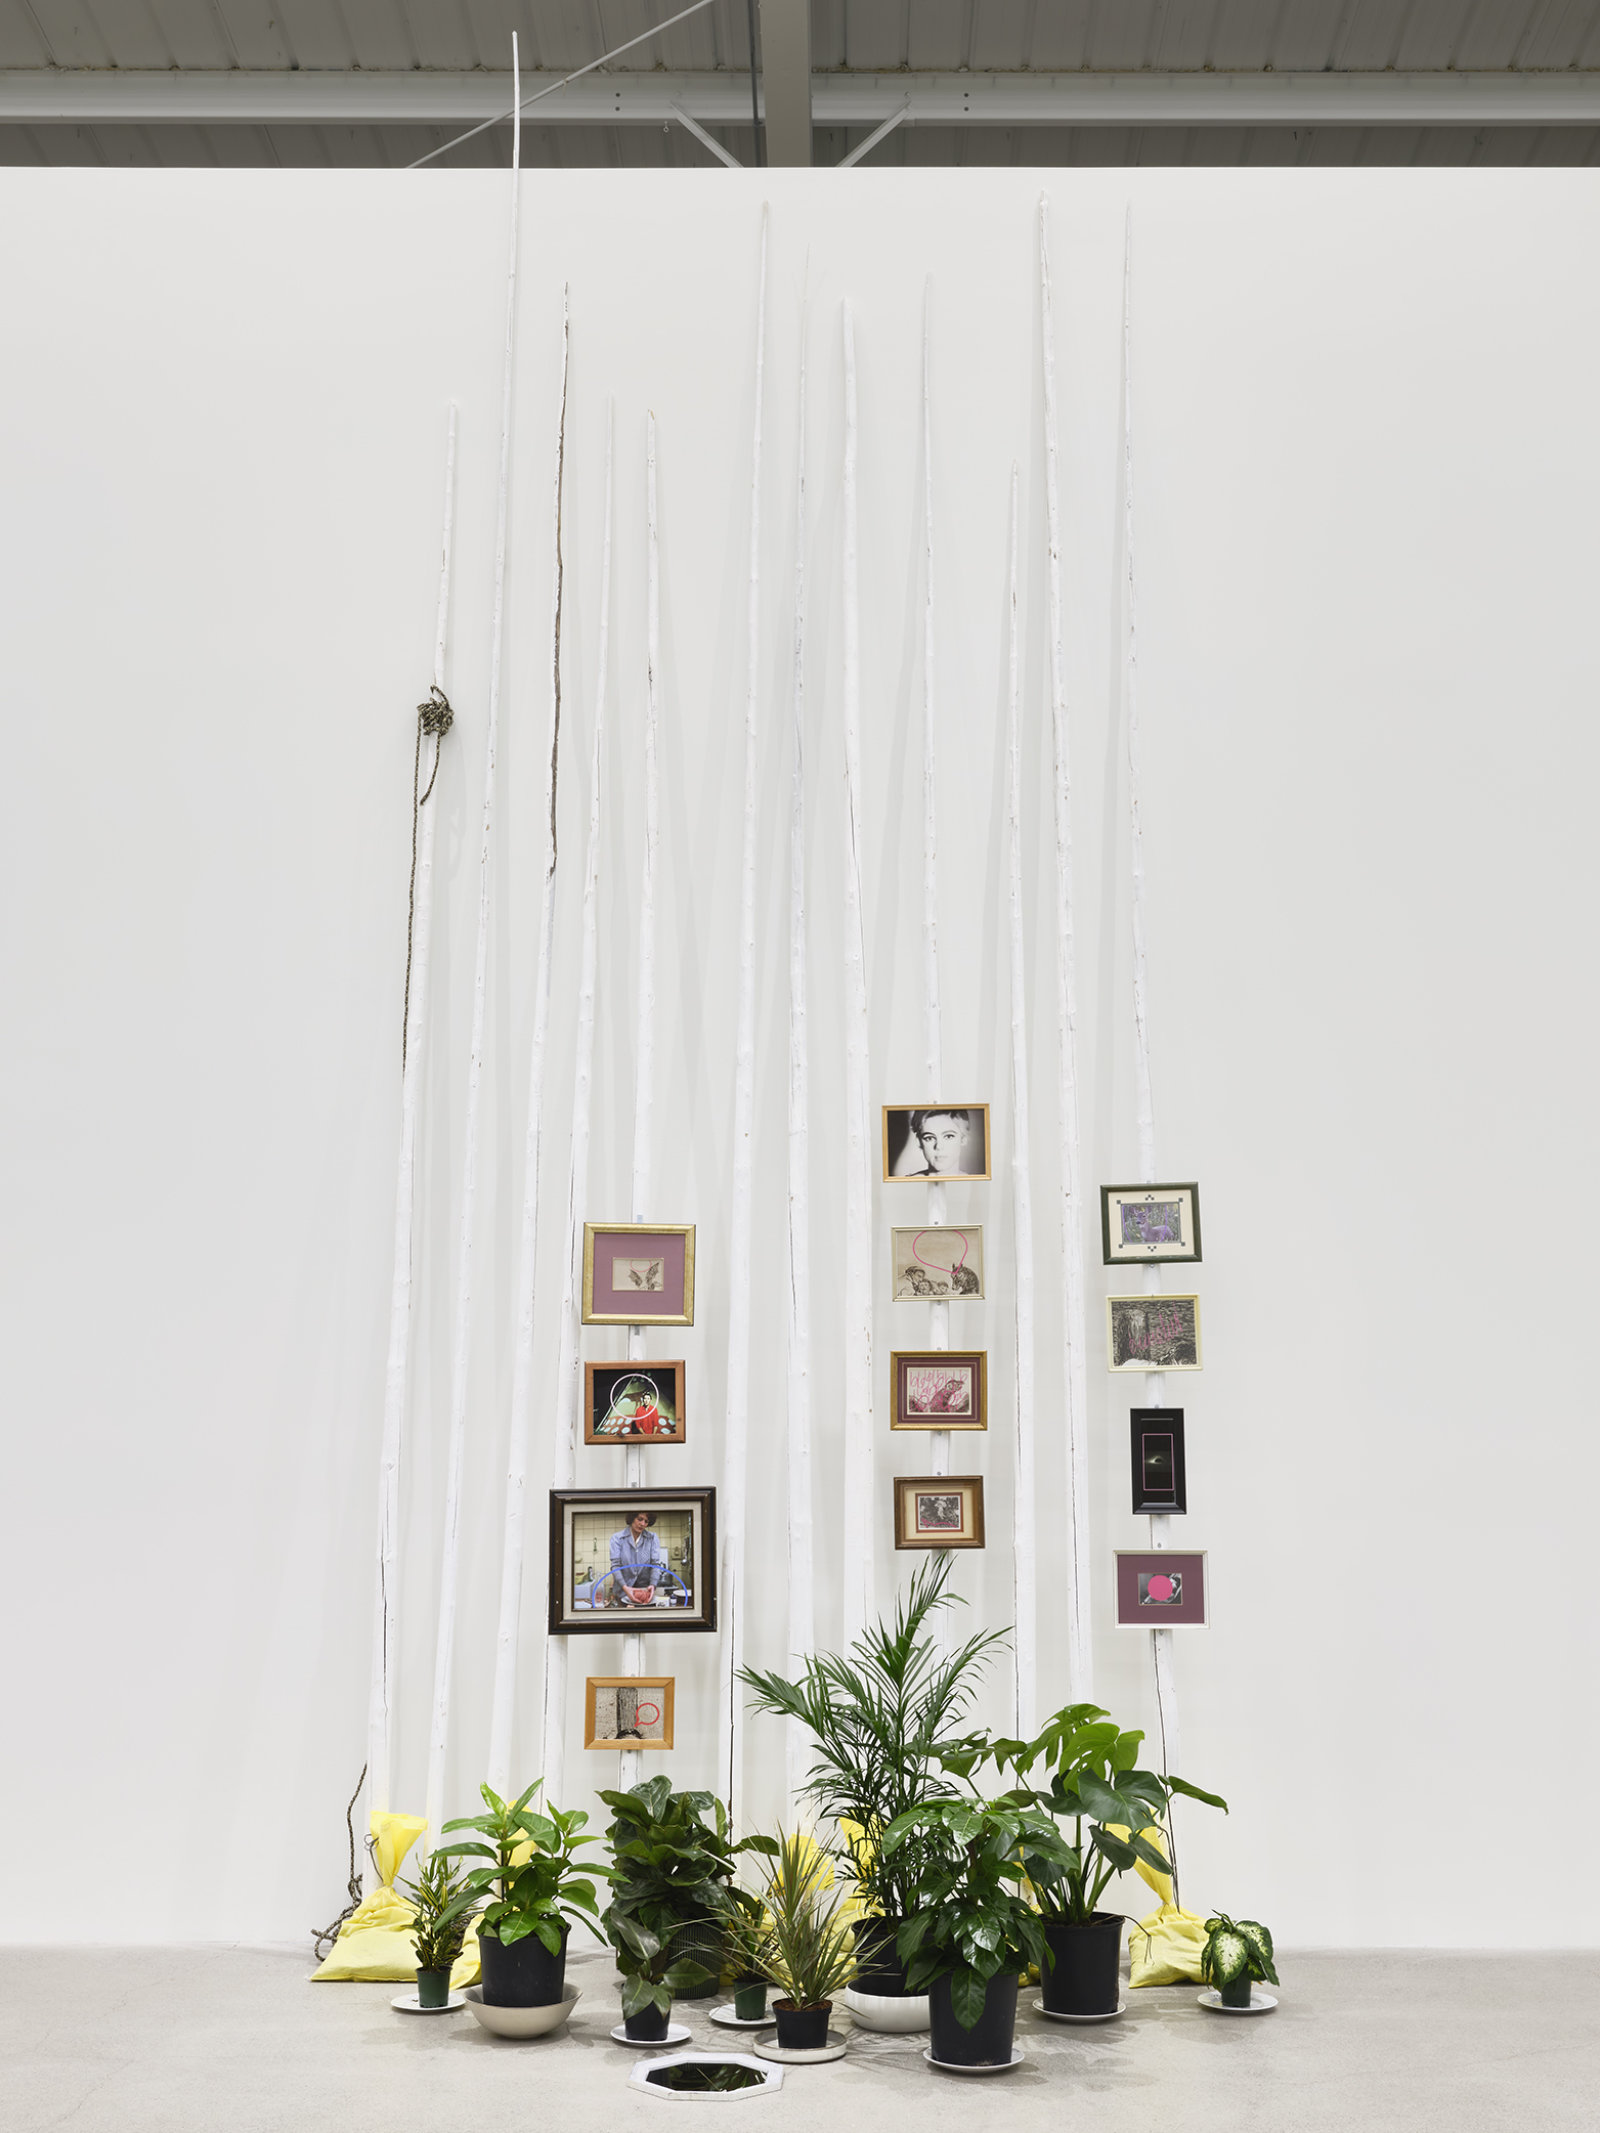 Duane Linklater, action at a distance, 2020, tipi poles, paint, nylon rope, plants, plates, ceramics, sandbags, frames, 12 digital prints, mirror, 233 x 102 x 66 in. (592 x 259 x 168 cm)